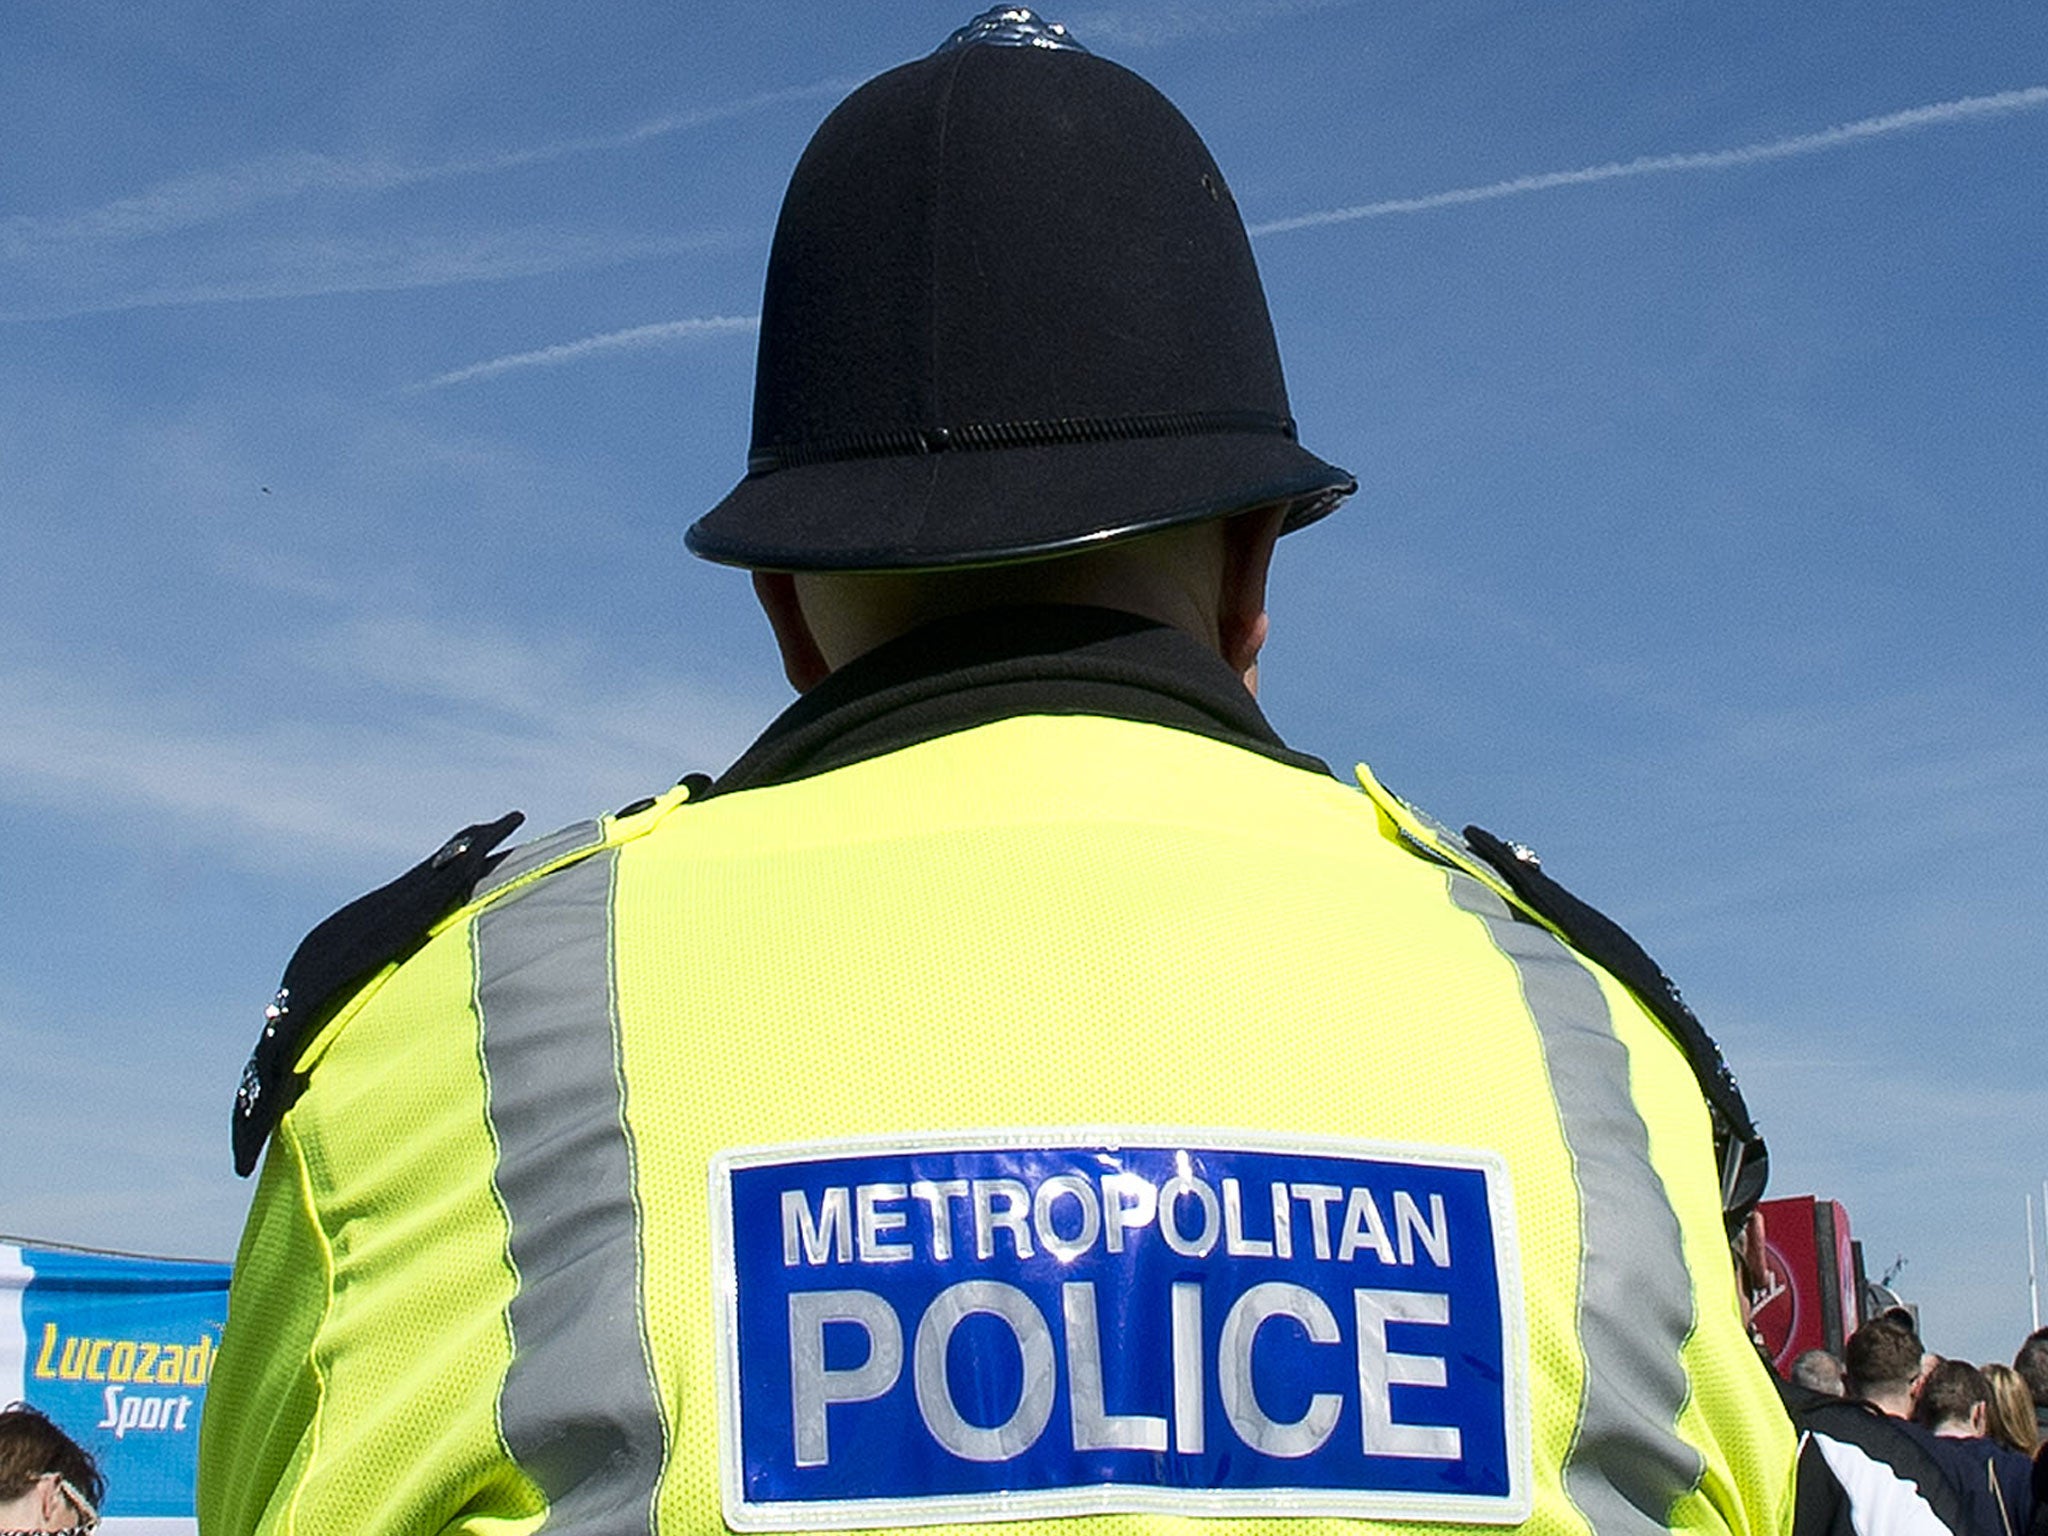 Metropolitan Police officers on patrol during the Virgin London Marathon 2013 on April 21, 2013 in London, England.